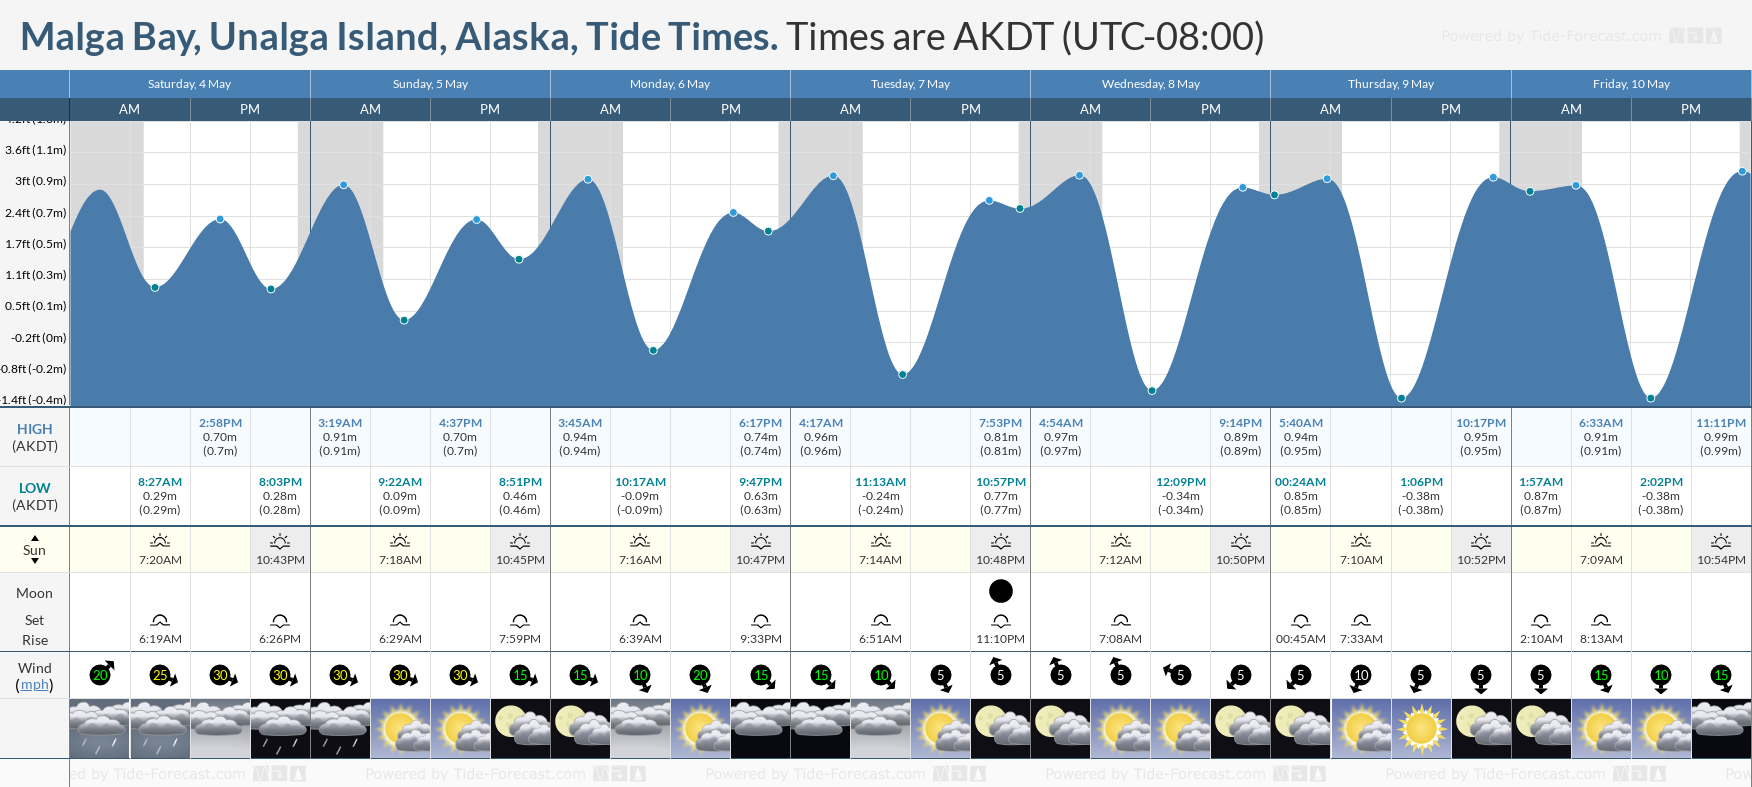 Malga Bay, Unalga Island, Alaska Tide Chart including high and low tide tide times for the next 7 days